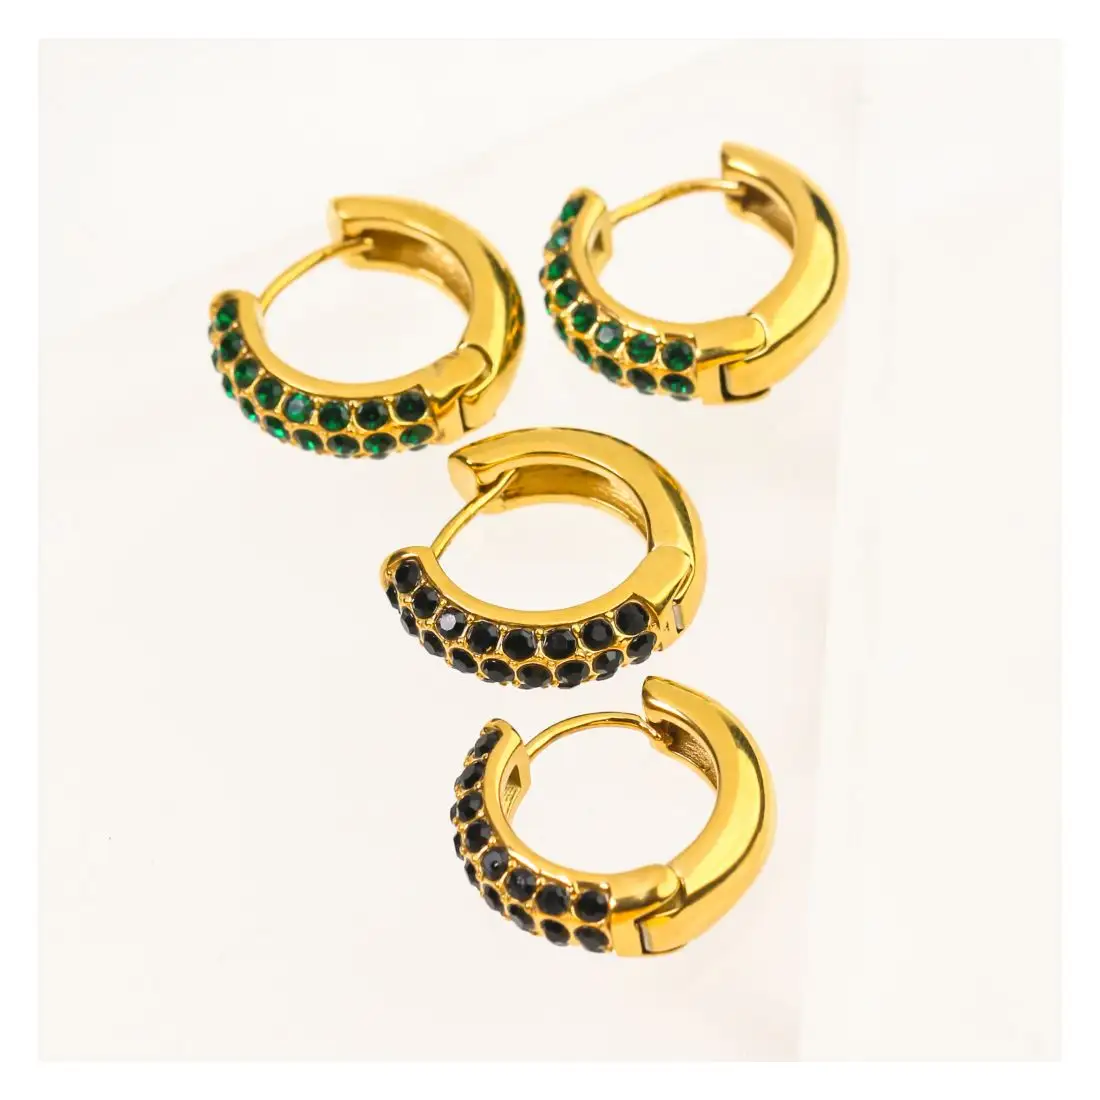 Free Sample Stainless Steel Gold Plated Crystal Earring Jewelry Black Green Cubic Zirconia Hoop Earrings